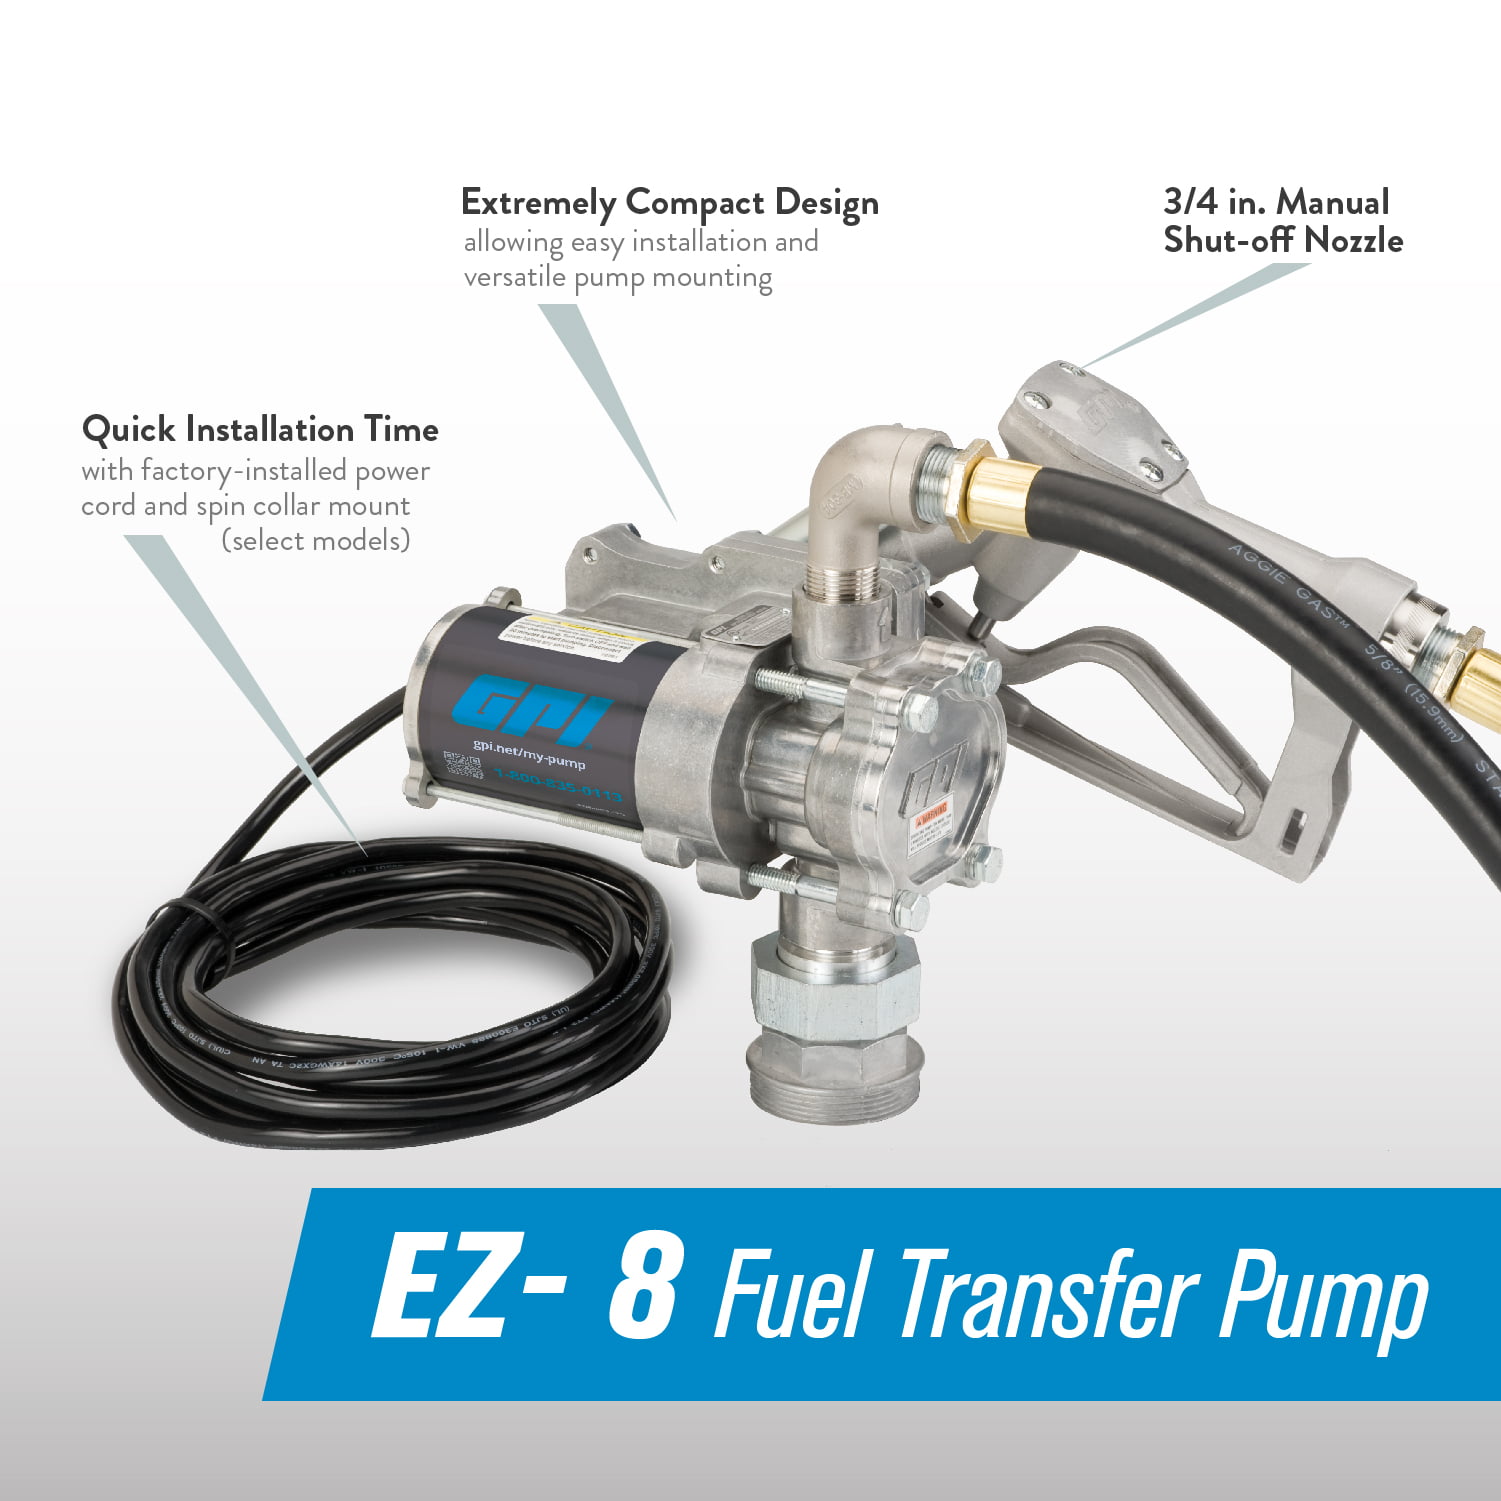 Ensemble de pompe de transfert de carburant GPI EZ-8 12 V 8 gal/min avec  tuyau de 10 pi et embout manuel sans plomb